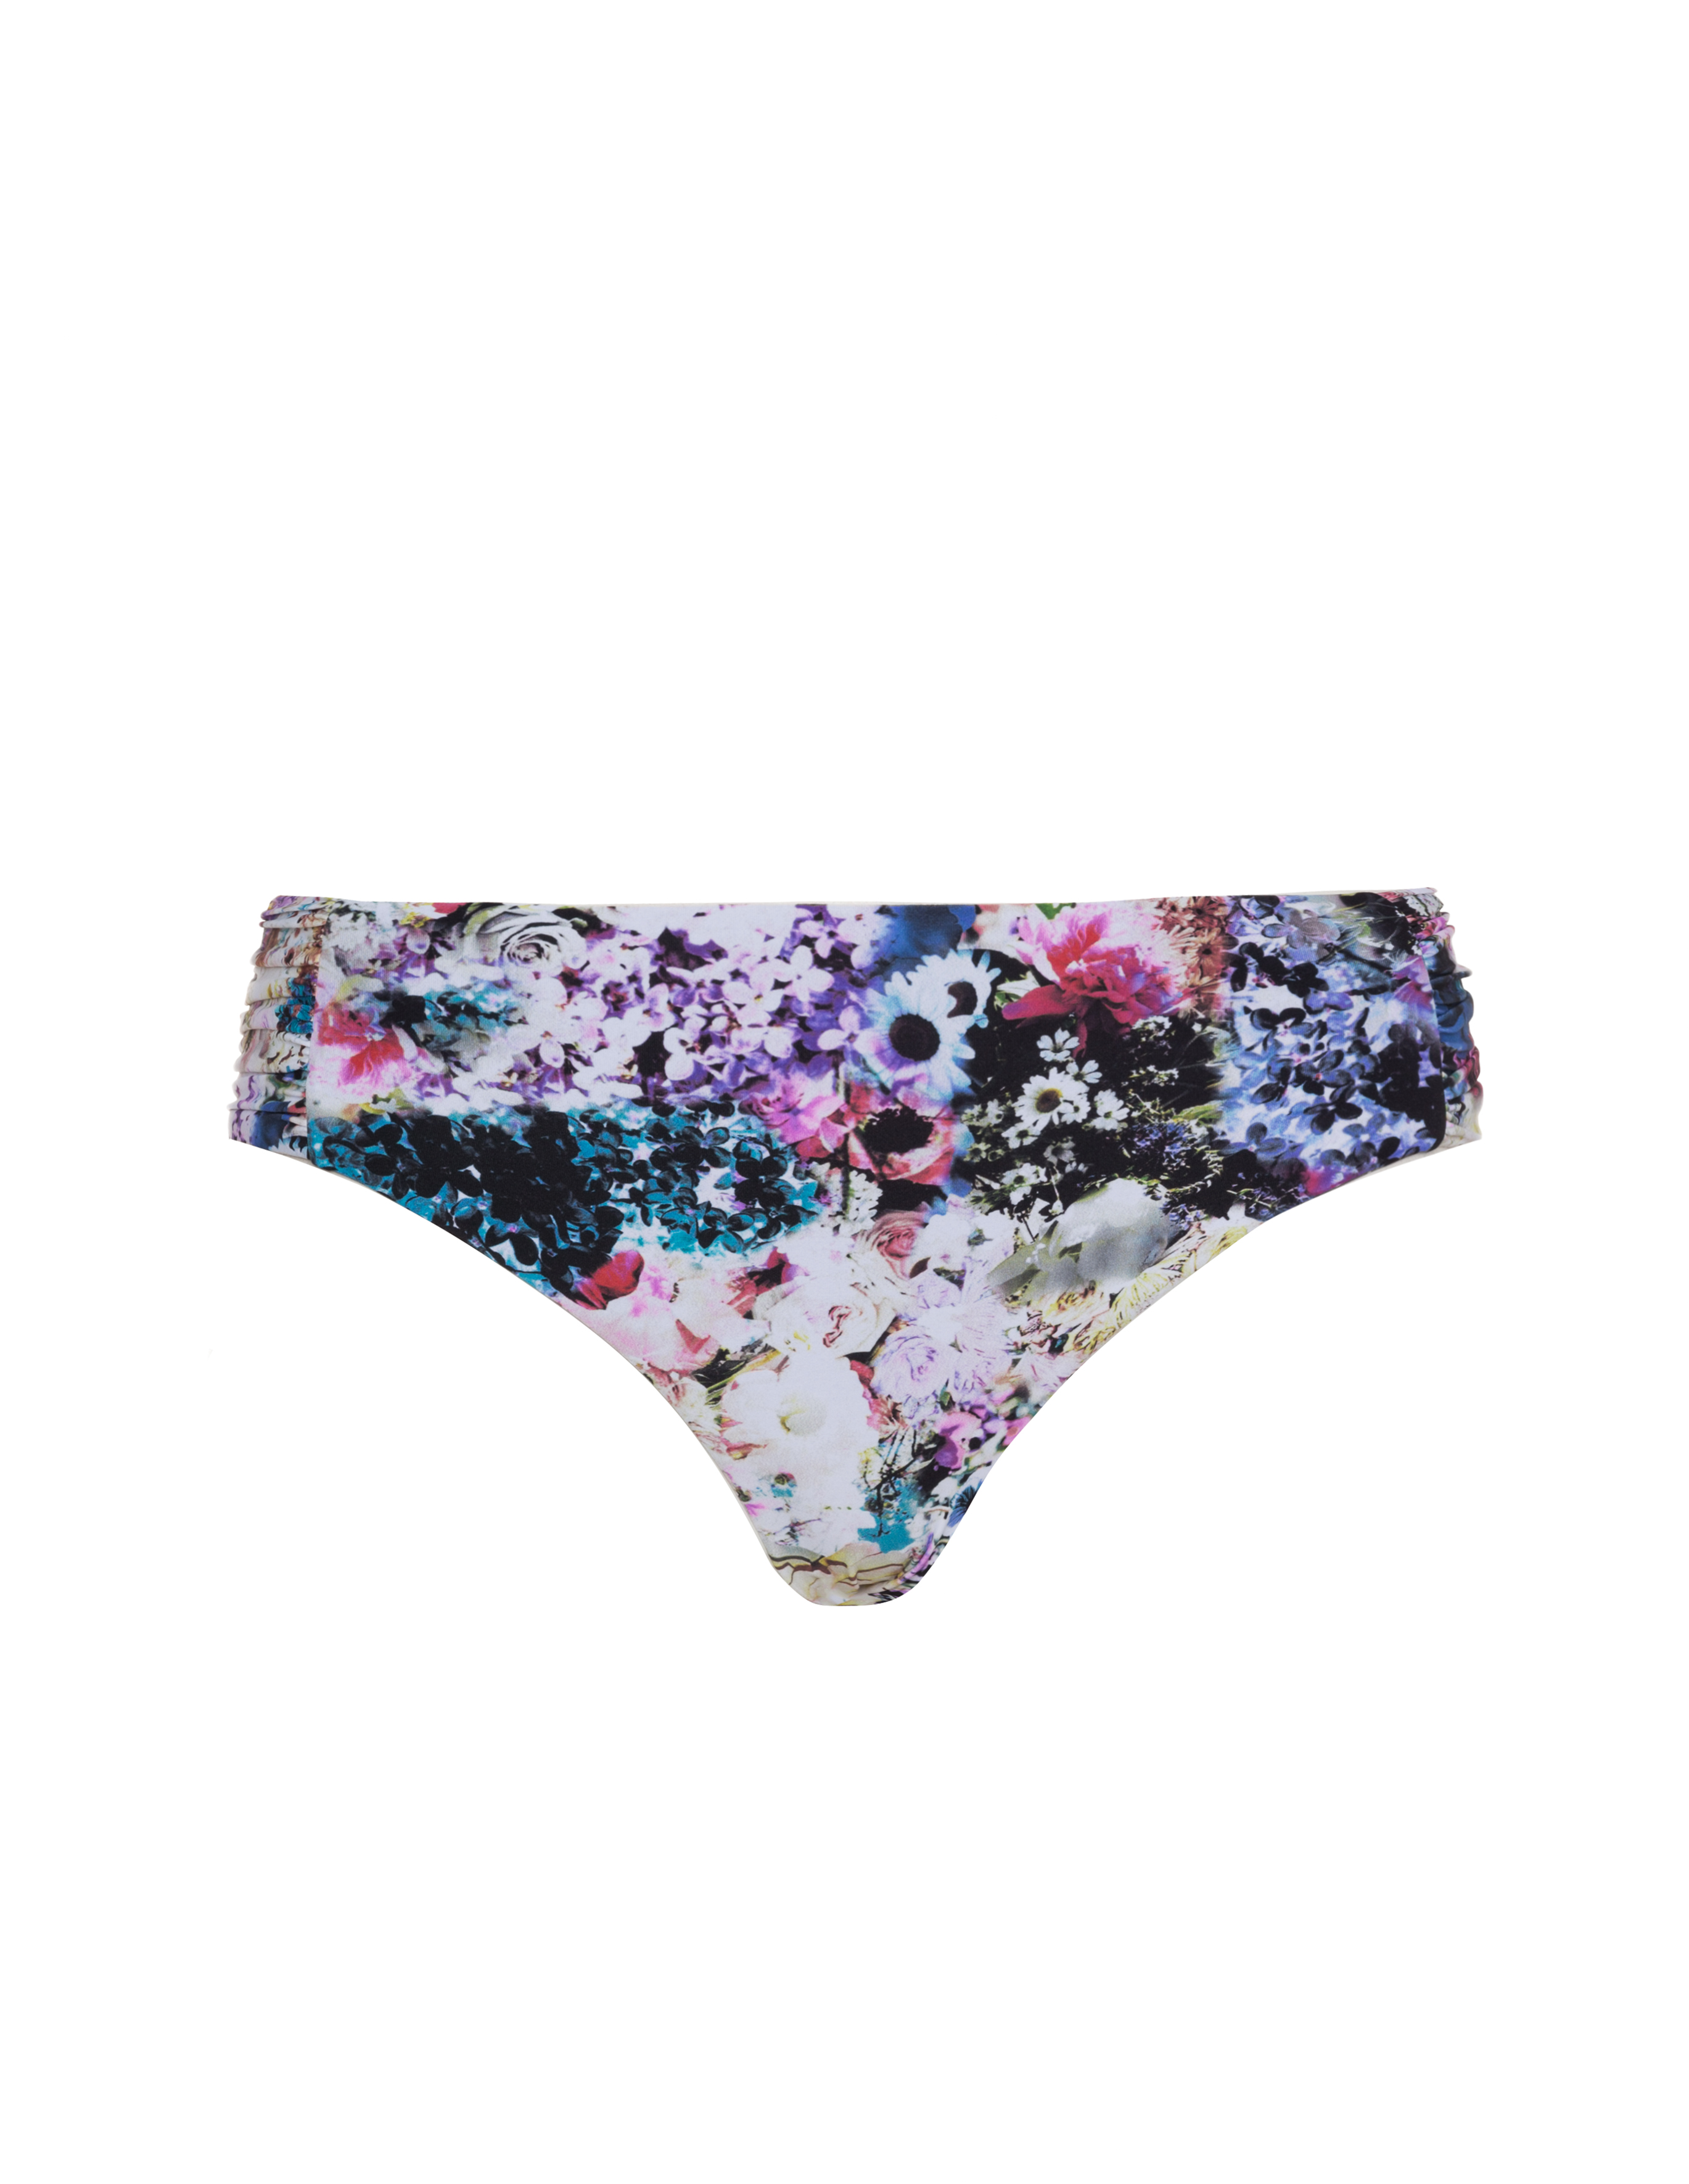 Robyn Lawley New Plus Size Swimwear Drop – New